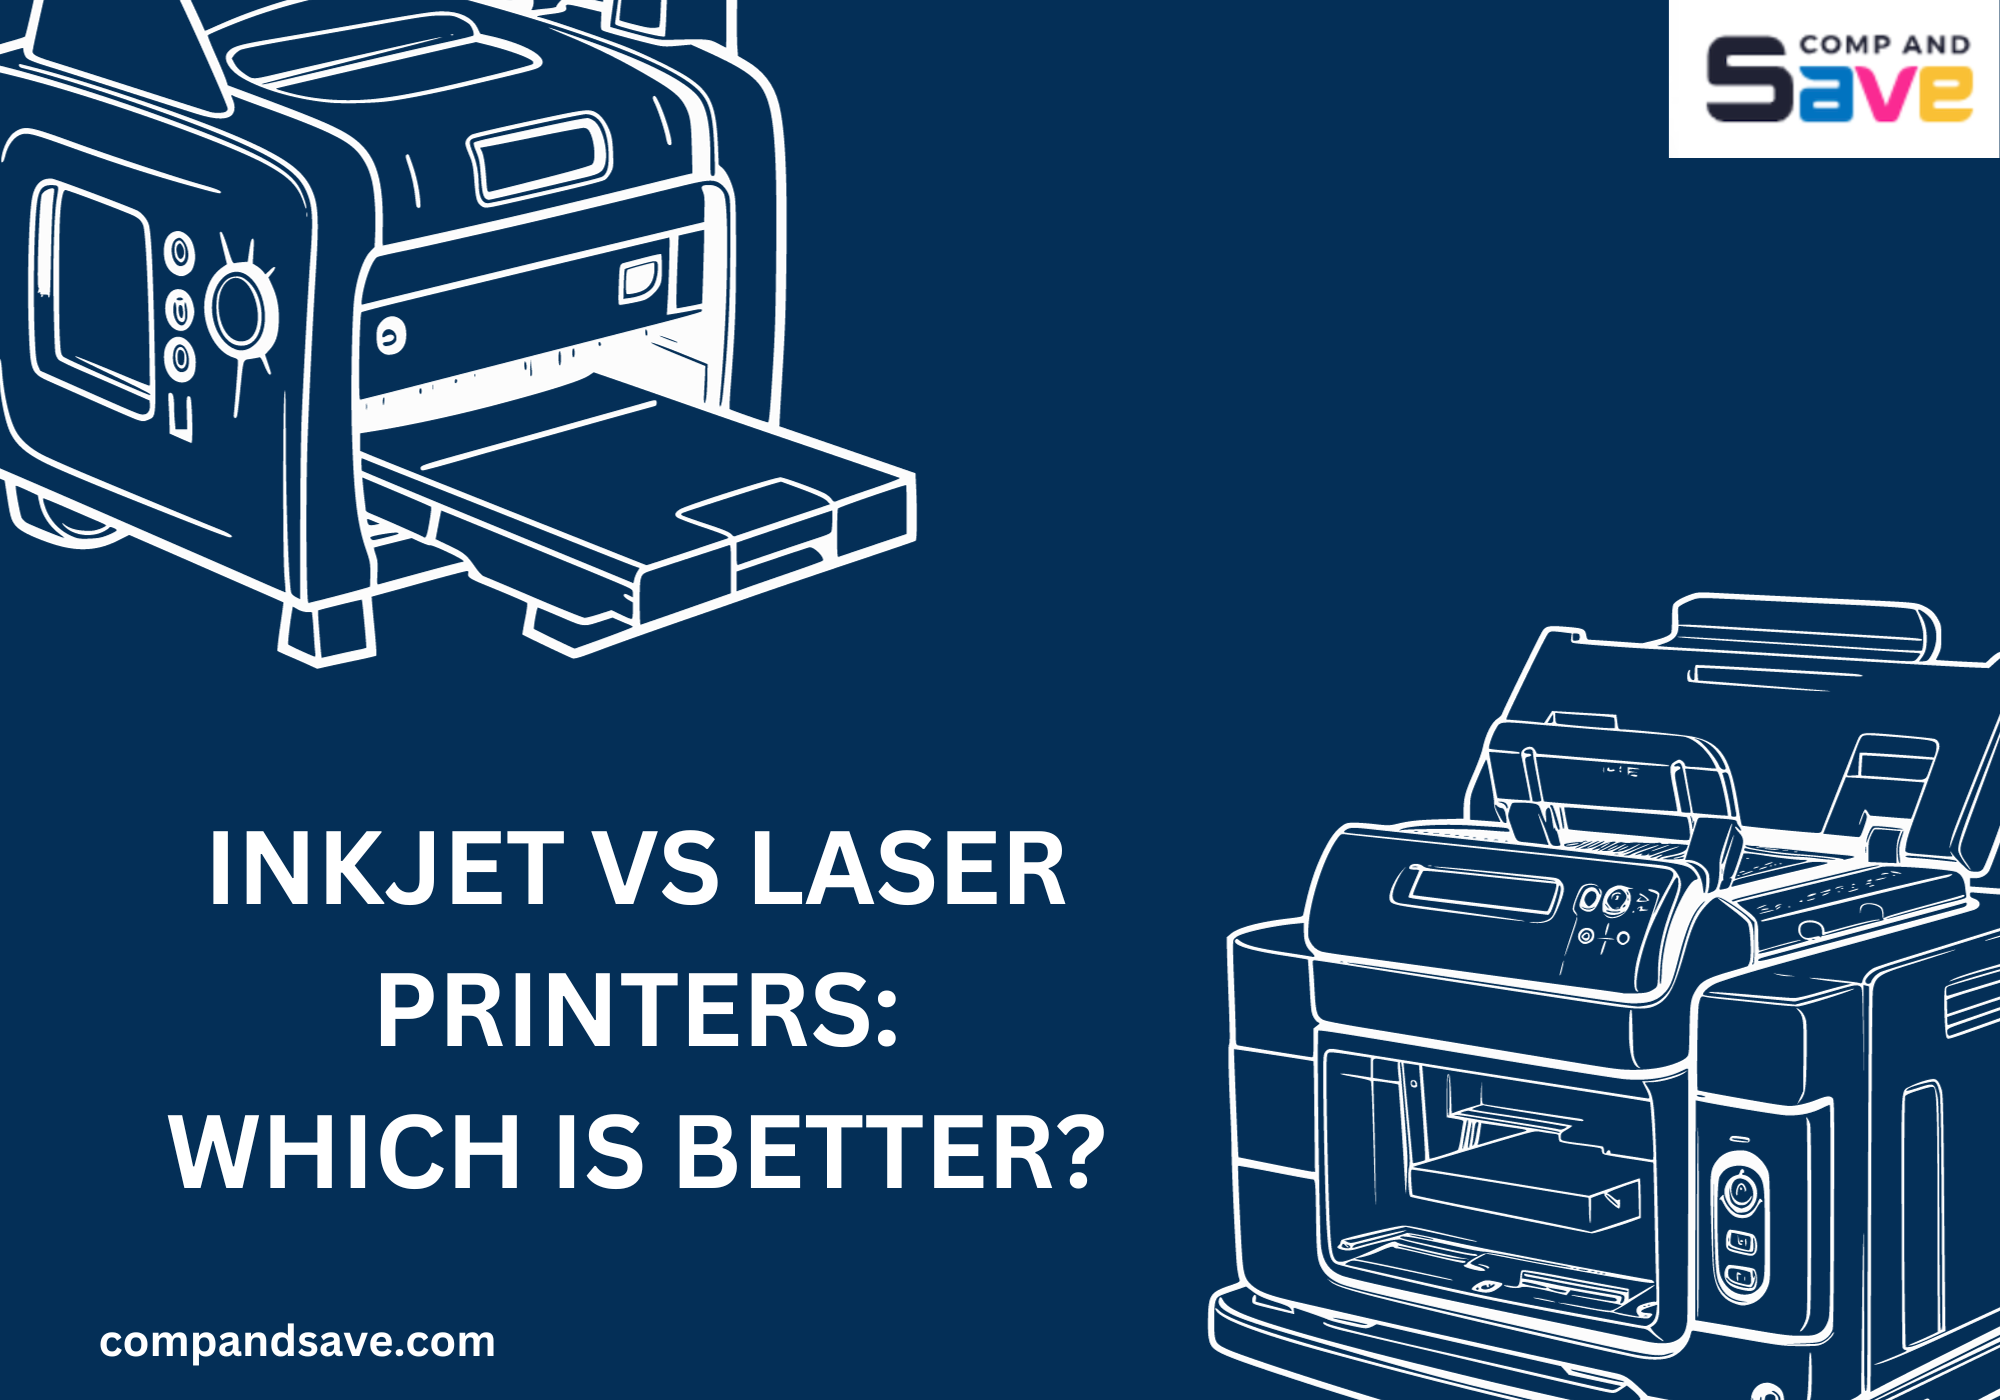 image from Inkjet vs Laser Printers: Advantages and Disadvantages